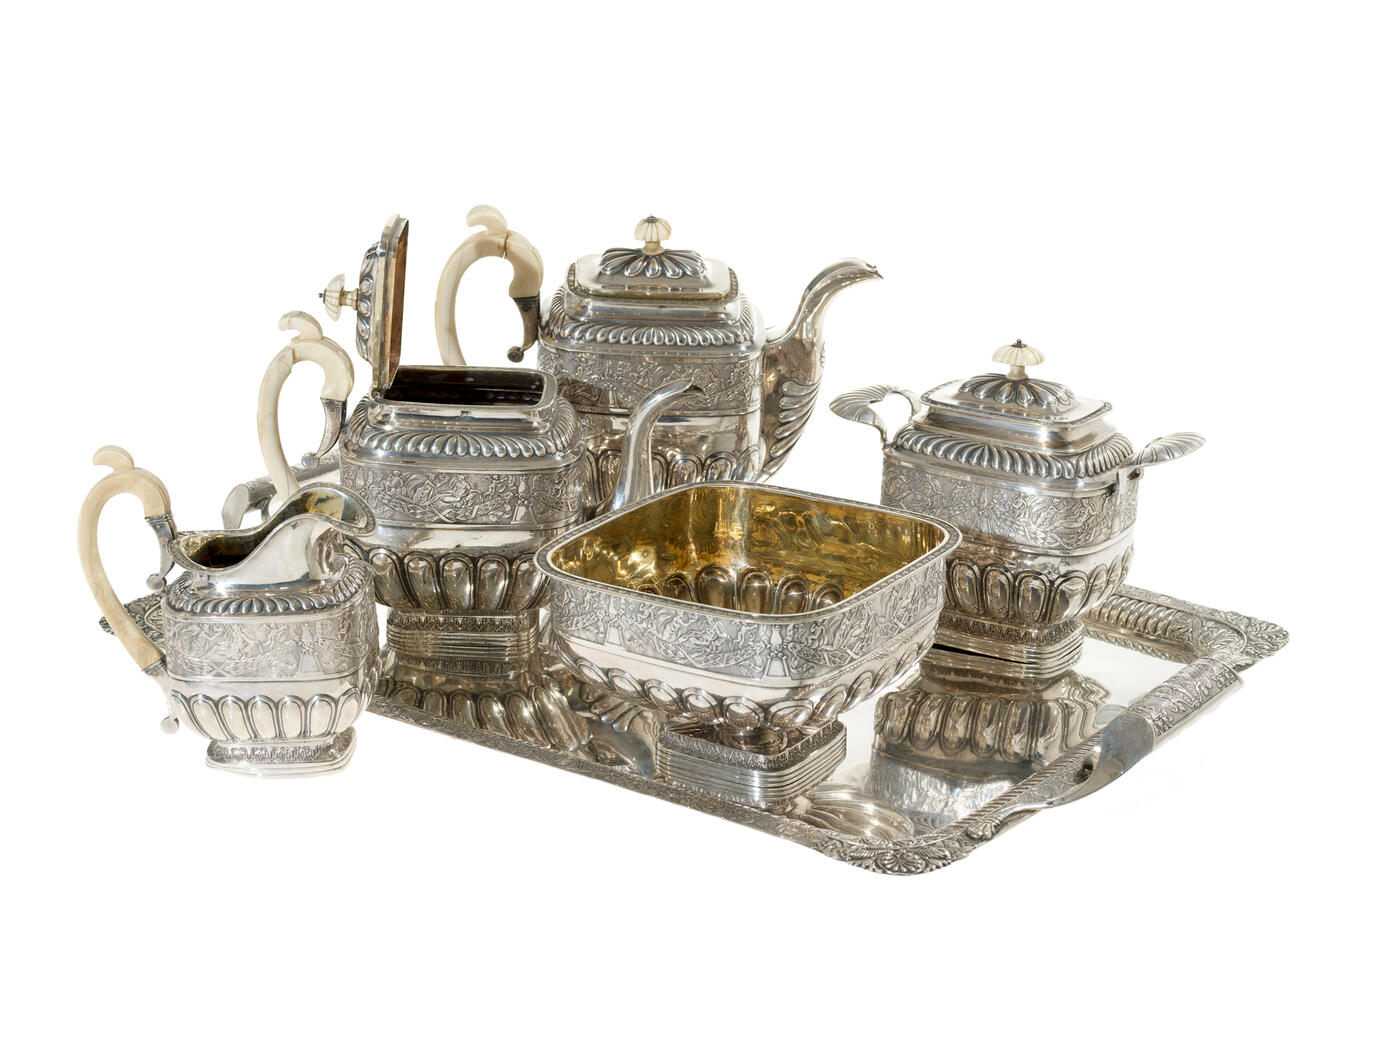 An Early 19th Century Silver Tea Service